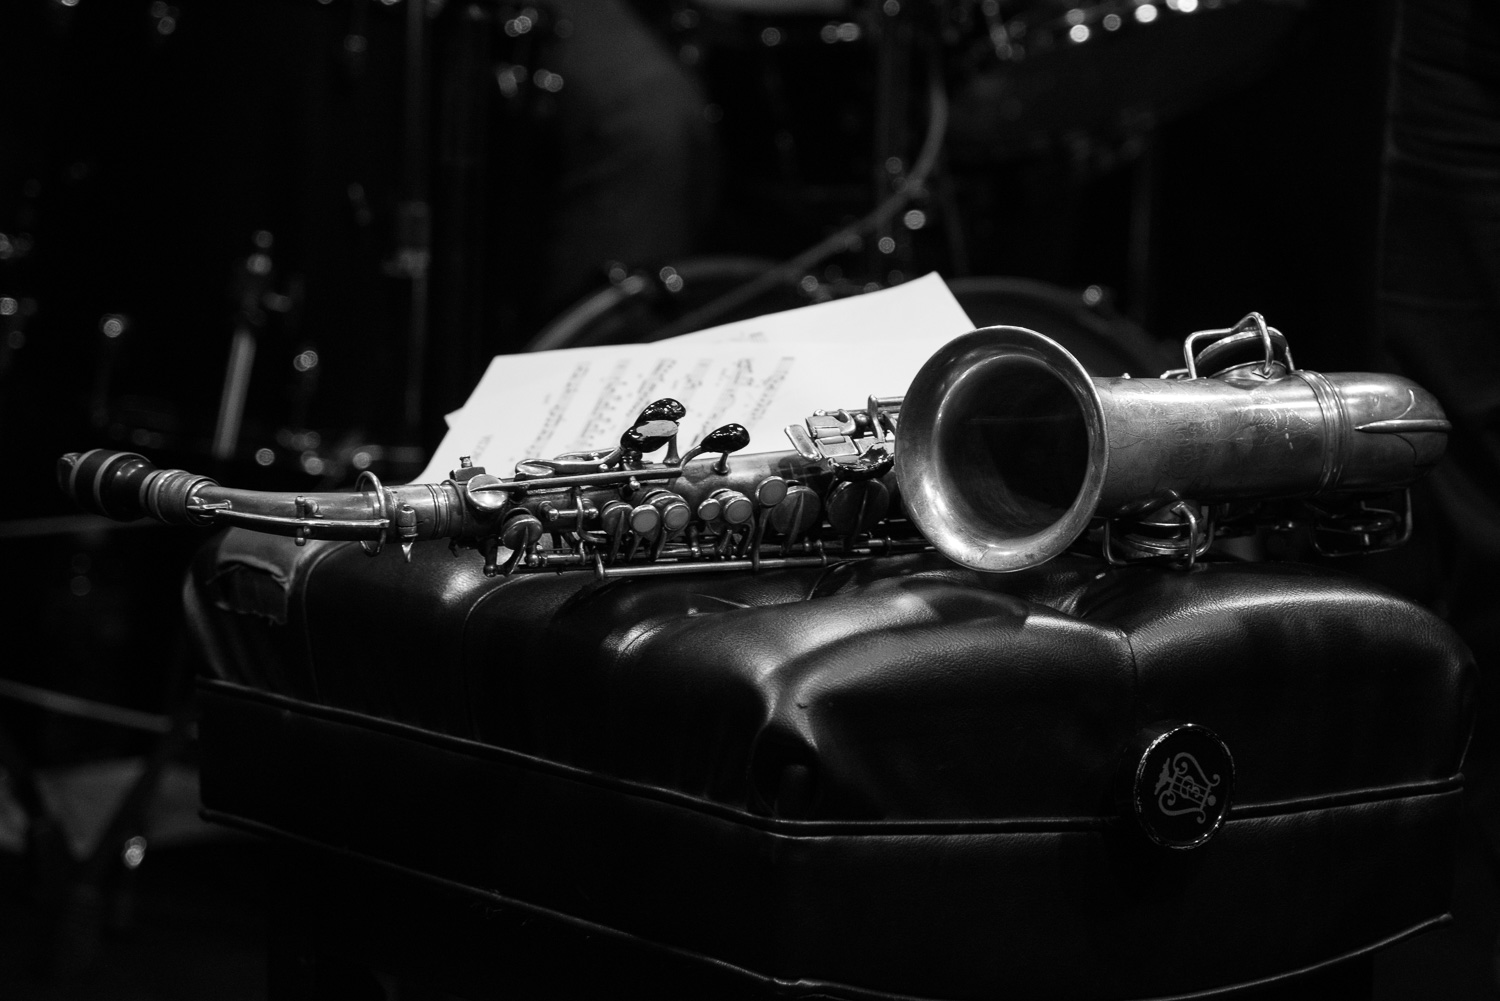 Oscar Noriega's saxophone, 2016